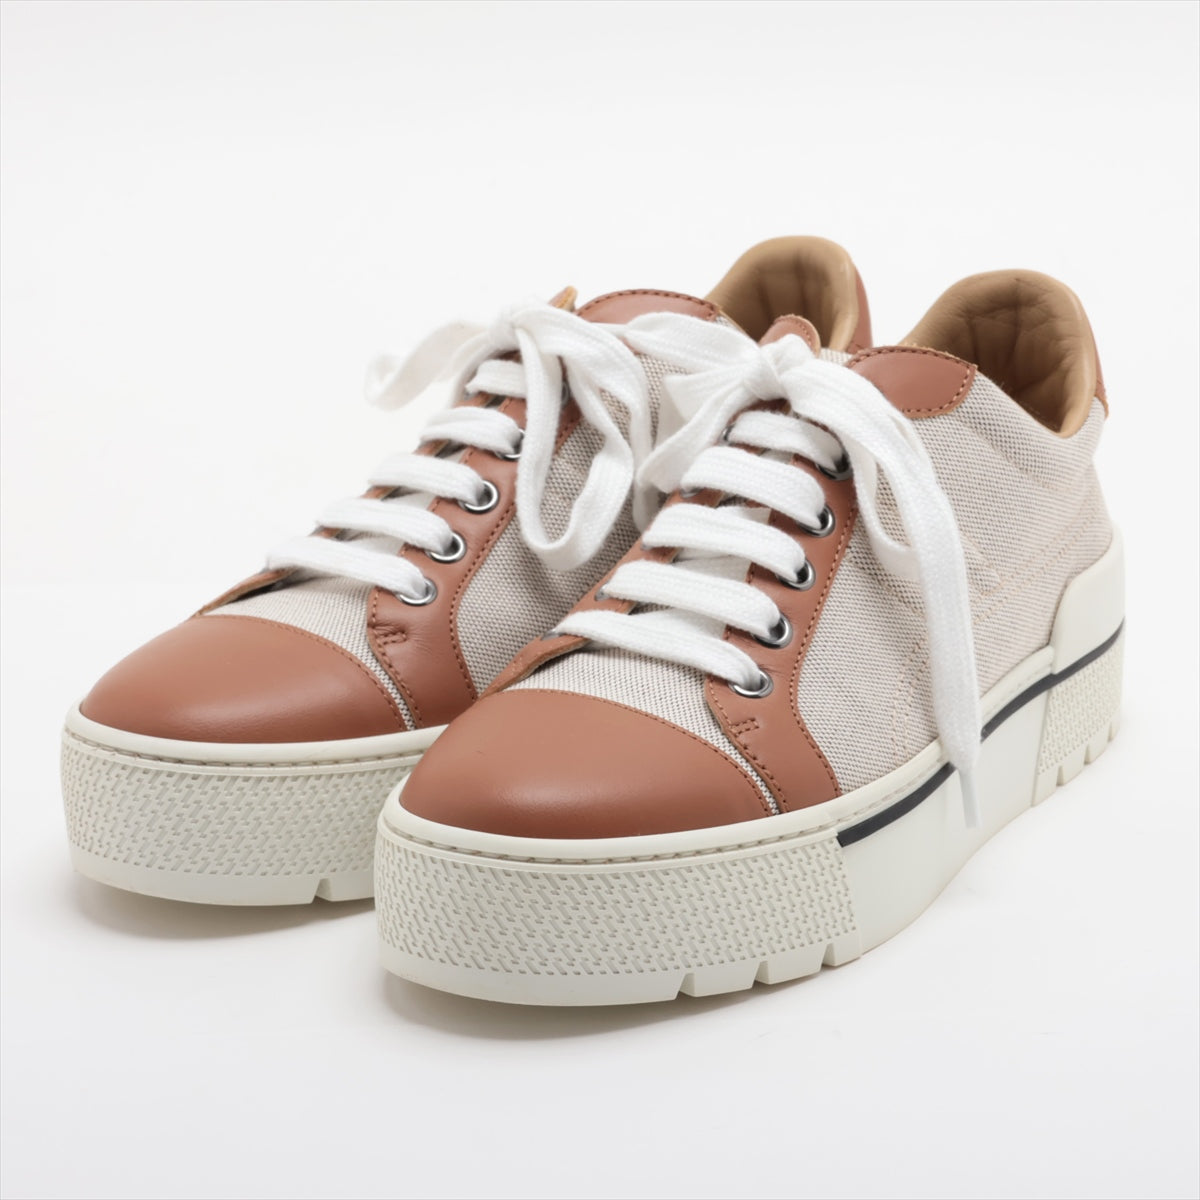 Hermès Voltages Canvas & leather Sneakers EU35 1/2 Ladies' White x brown